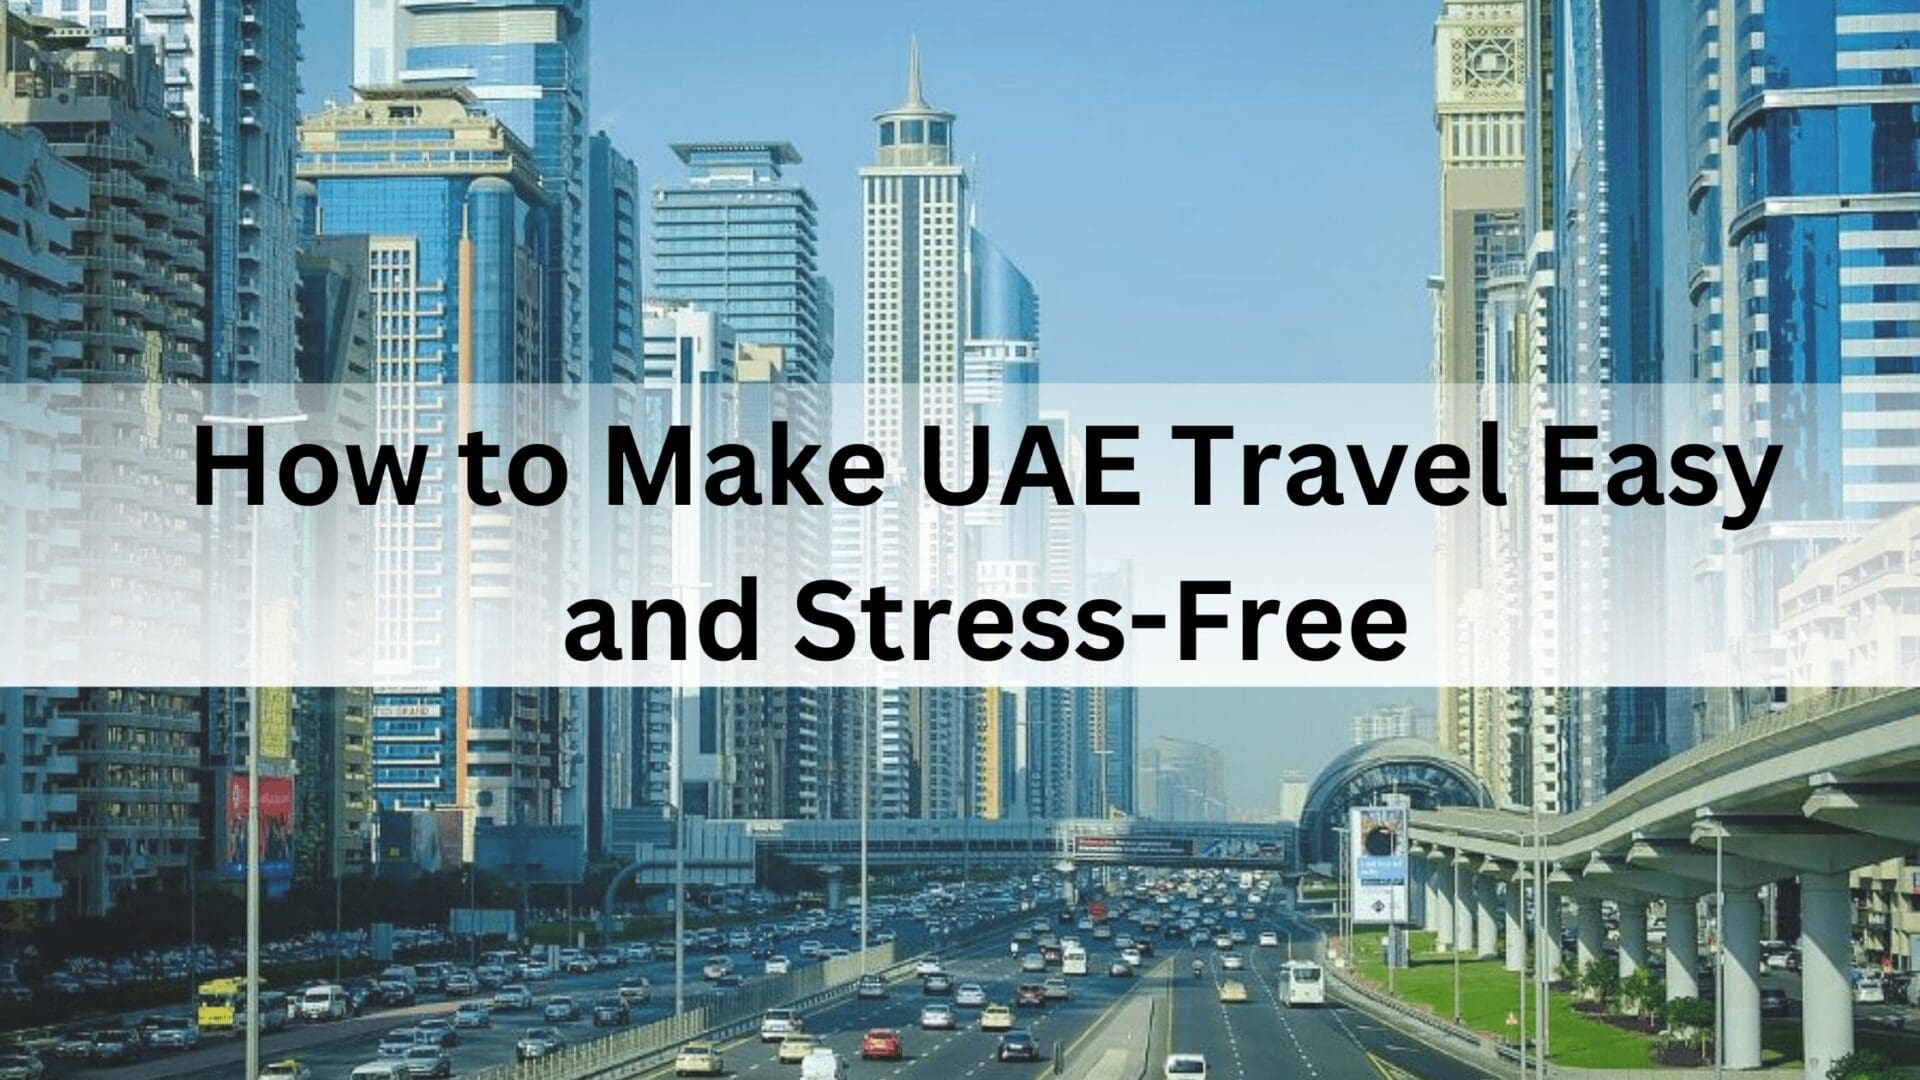 UAE travel tips